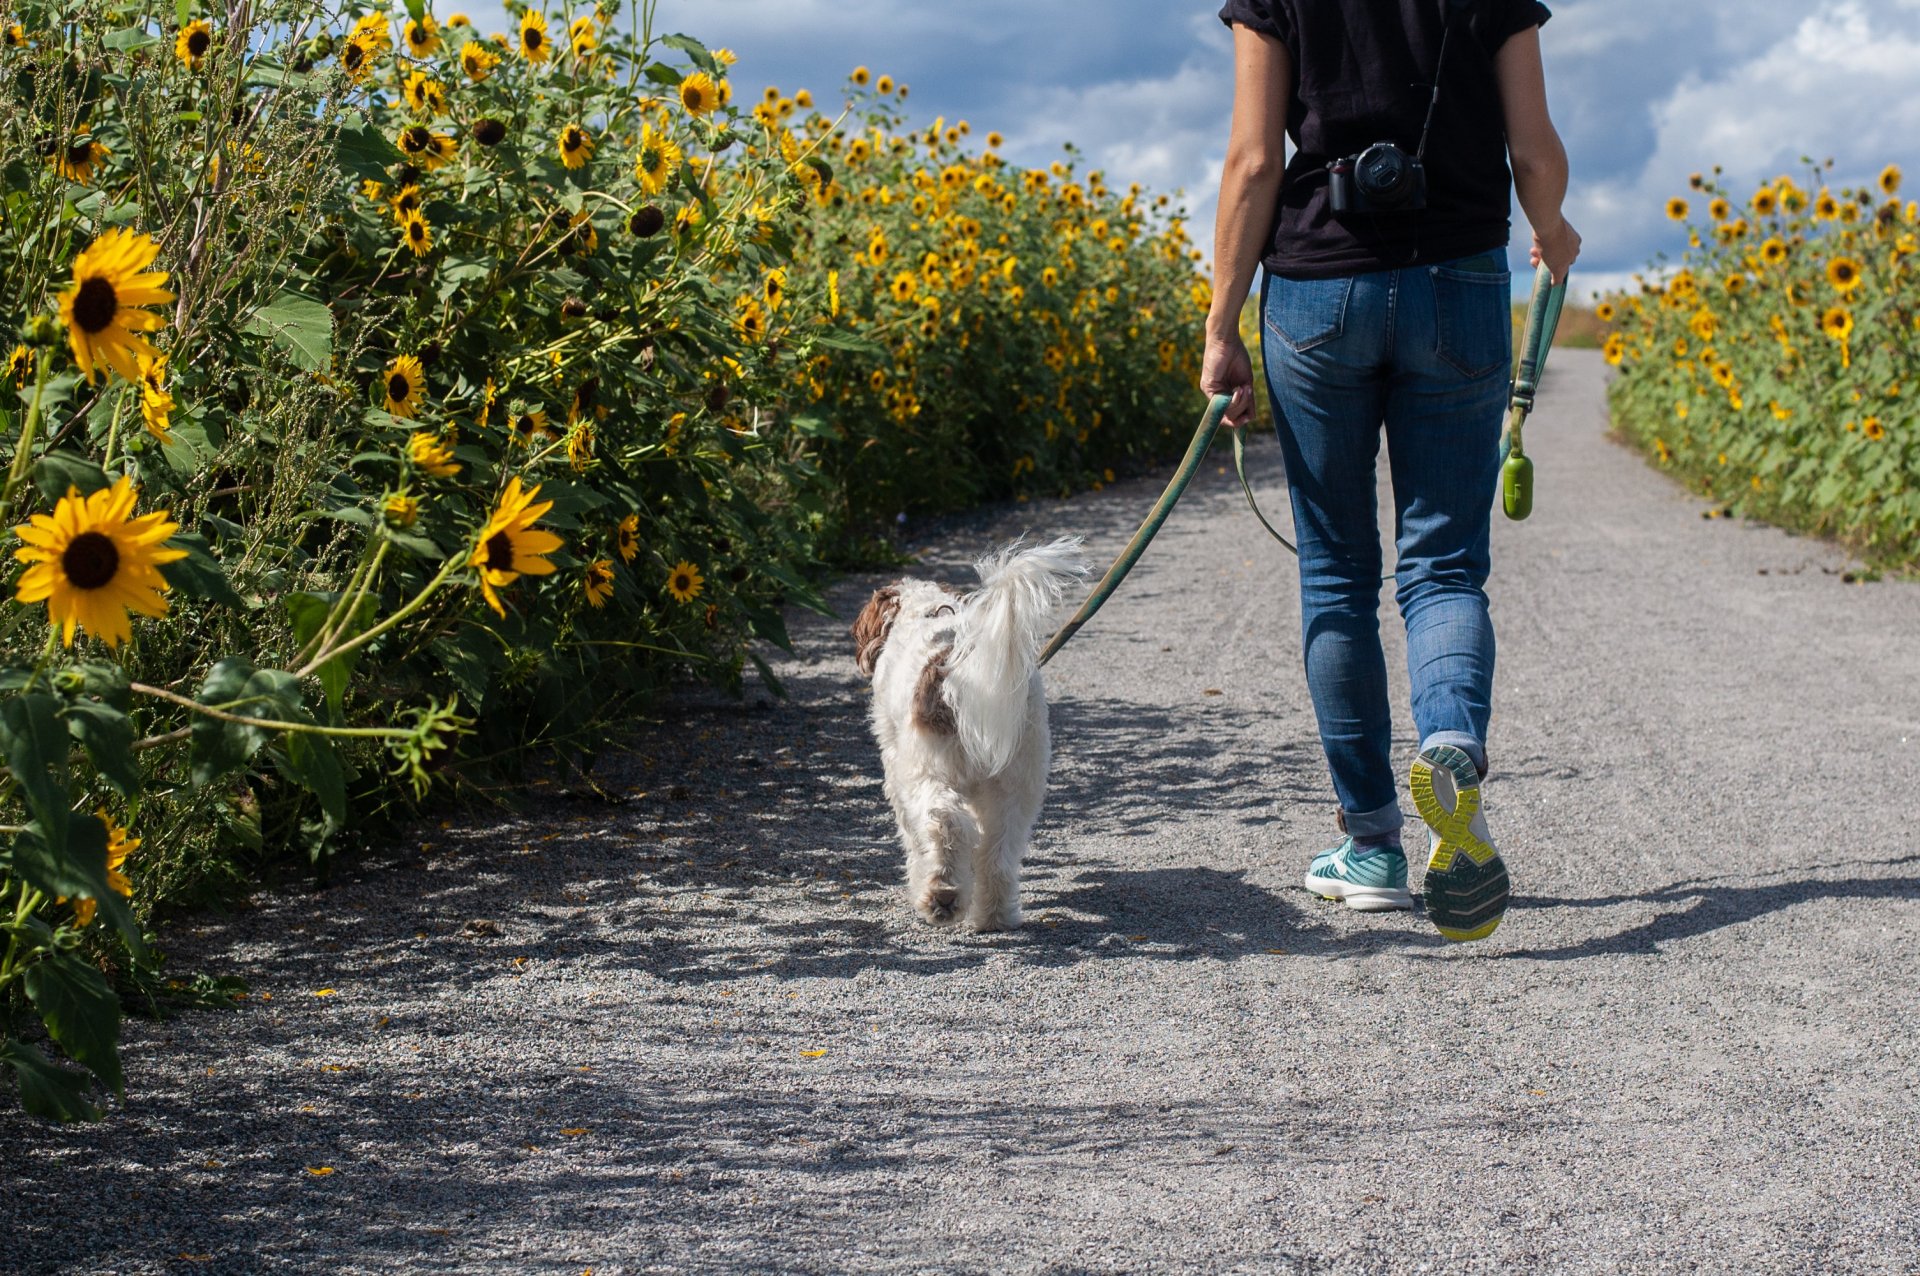 Dog walking next to a sunflower field